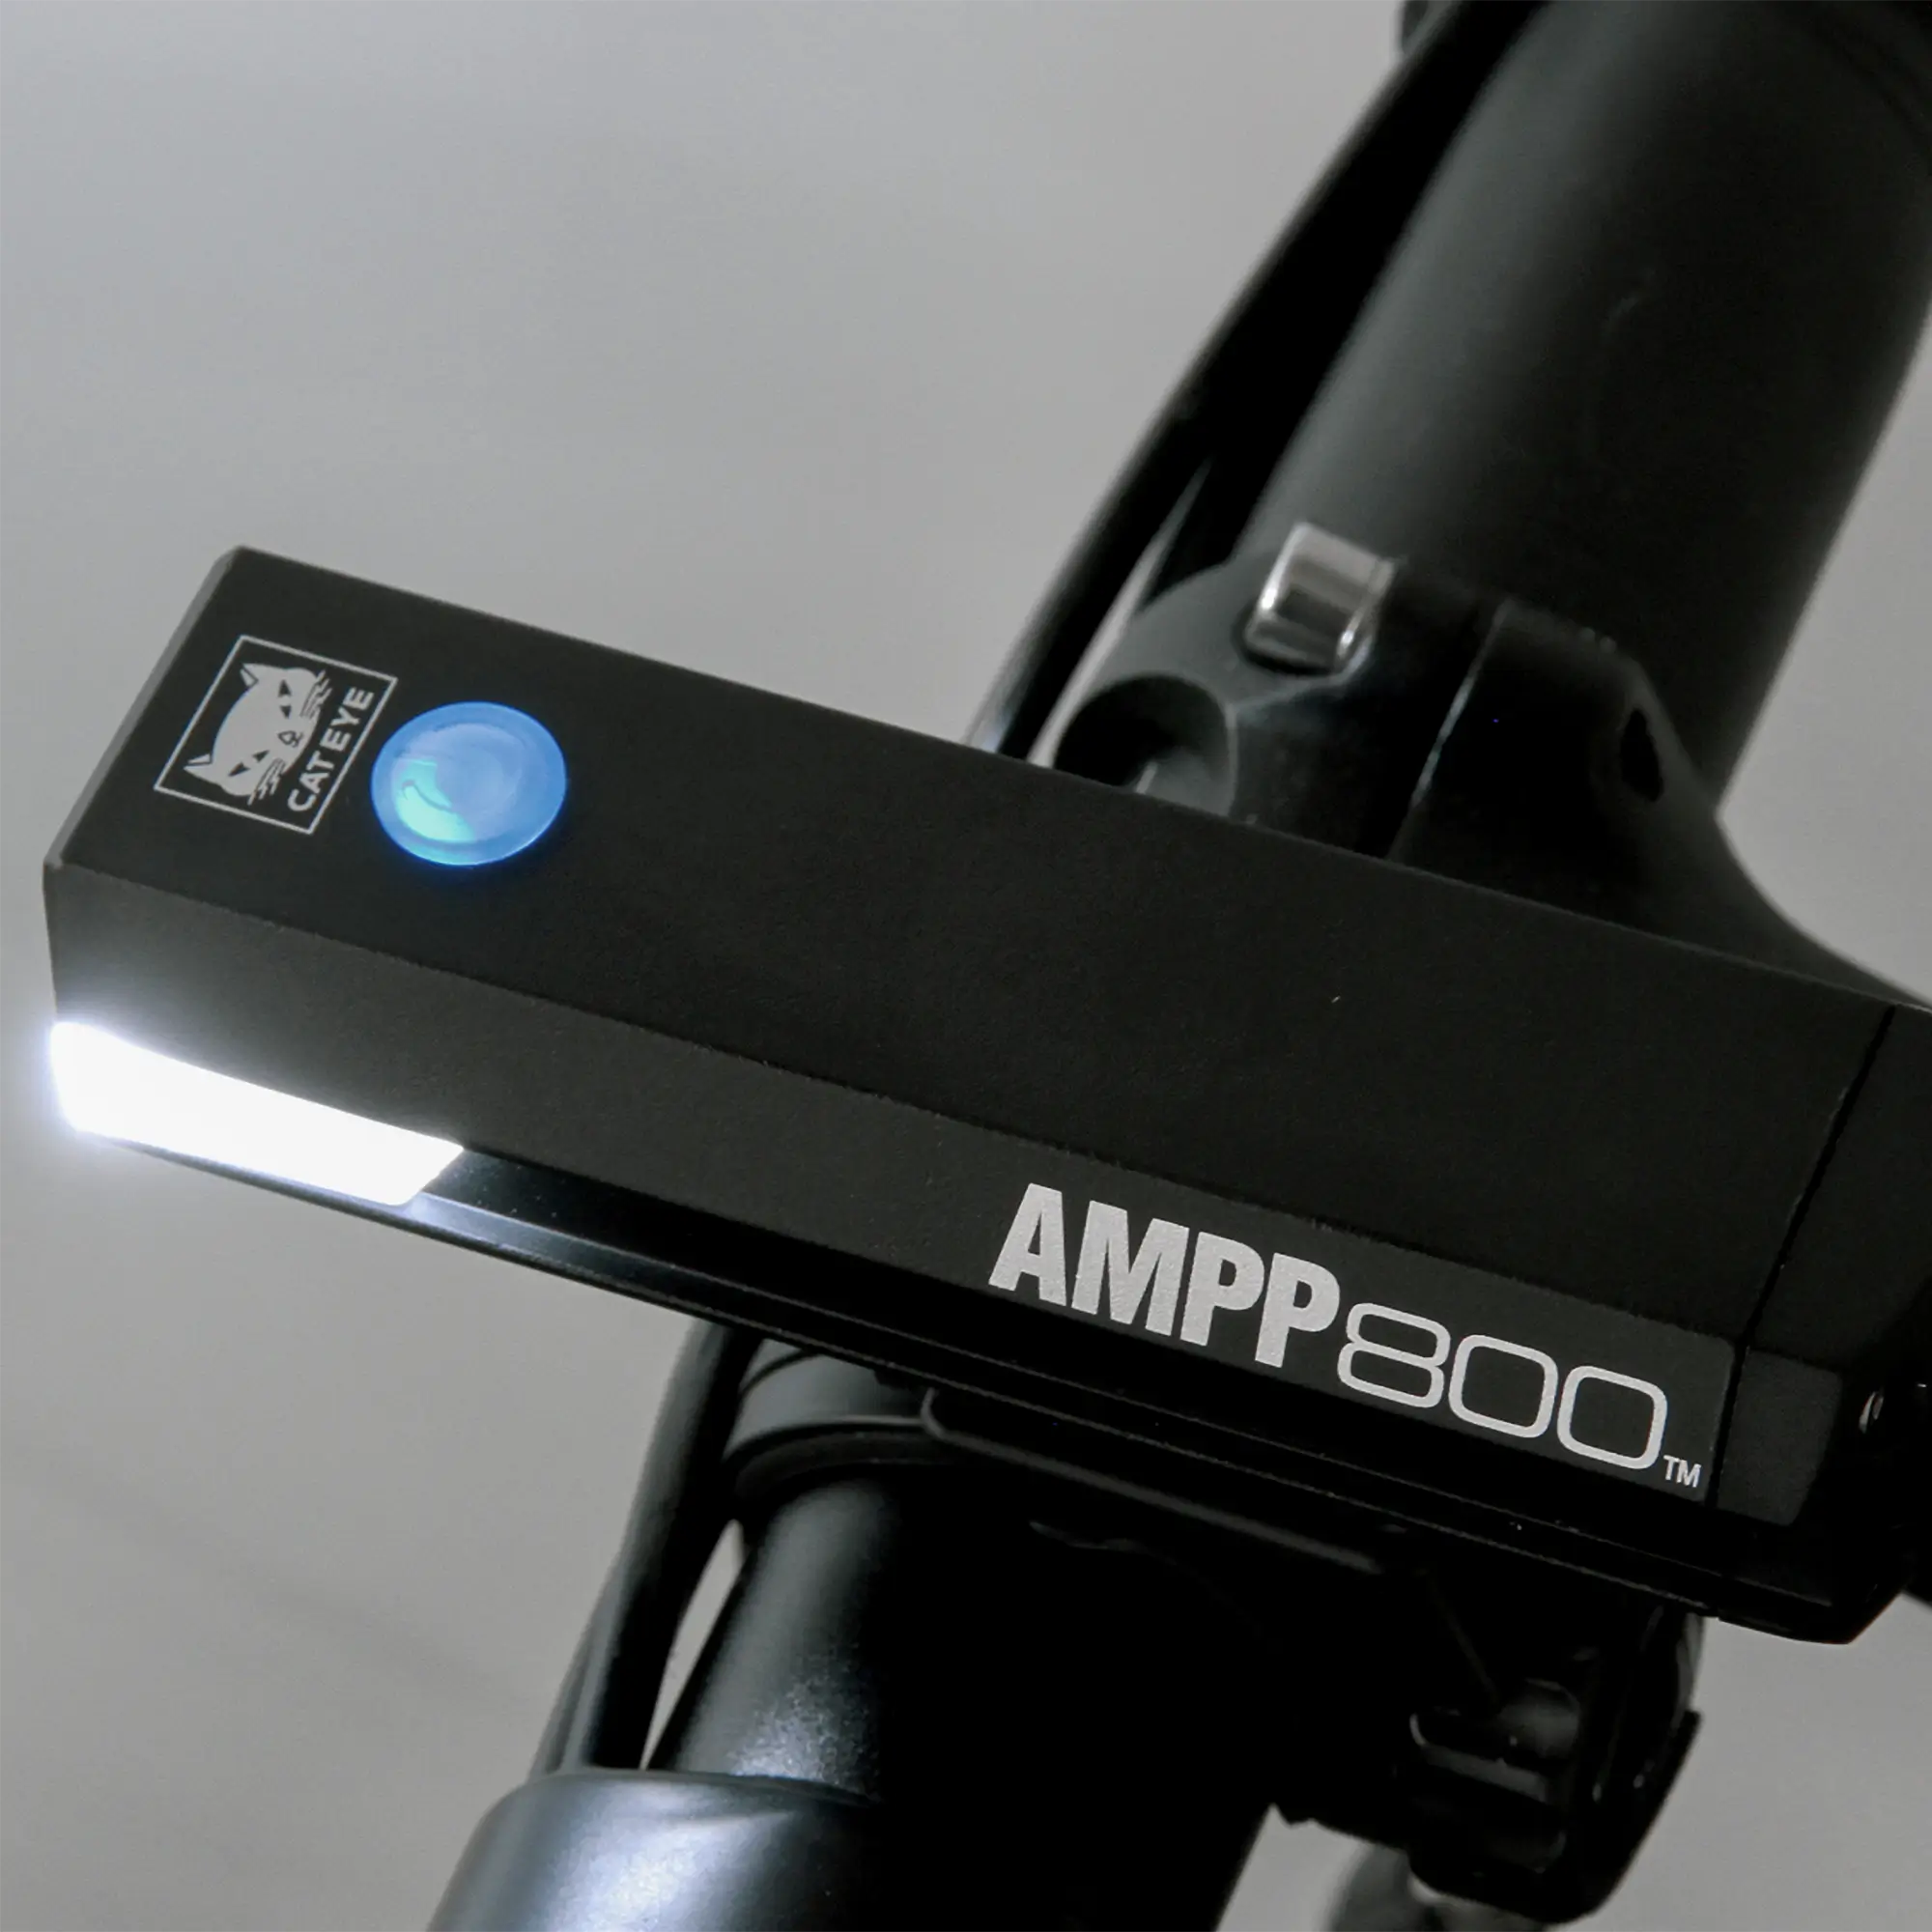 AMPP800